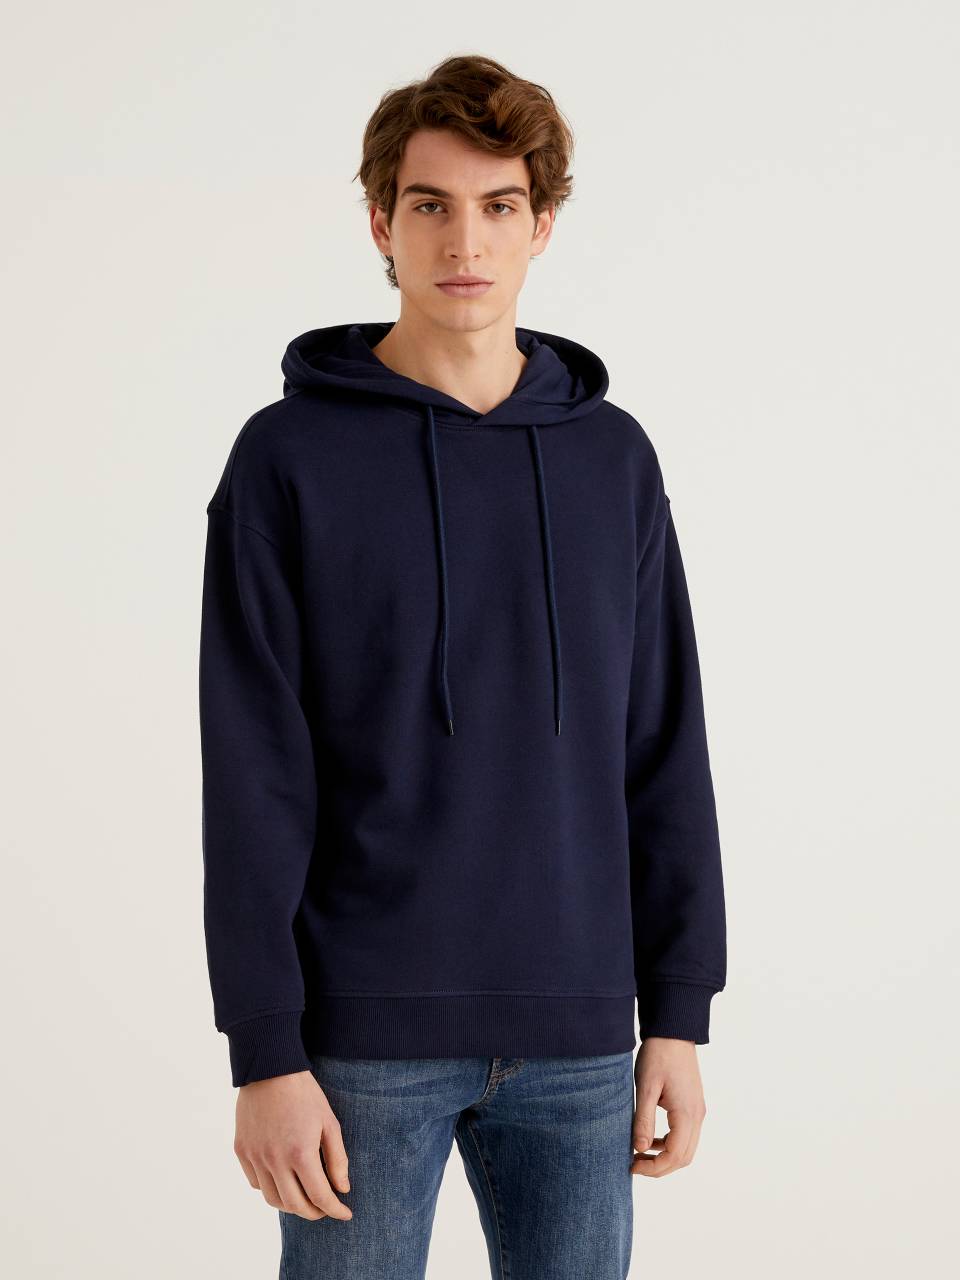 Benetton 100% cotton hoodie. 1